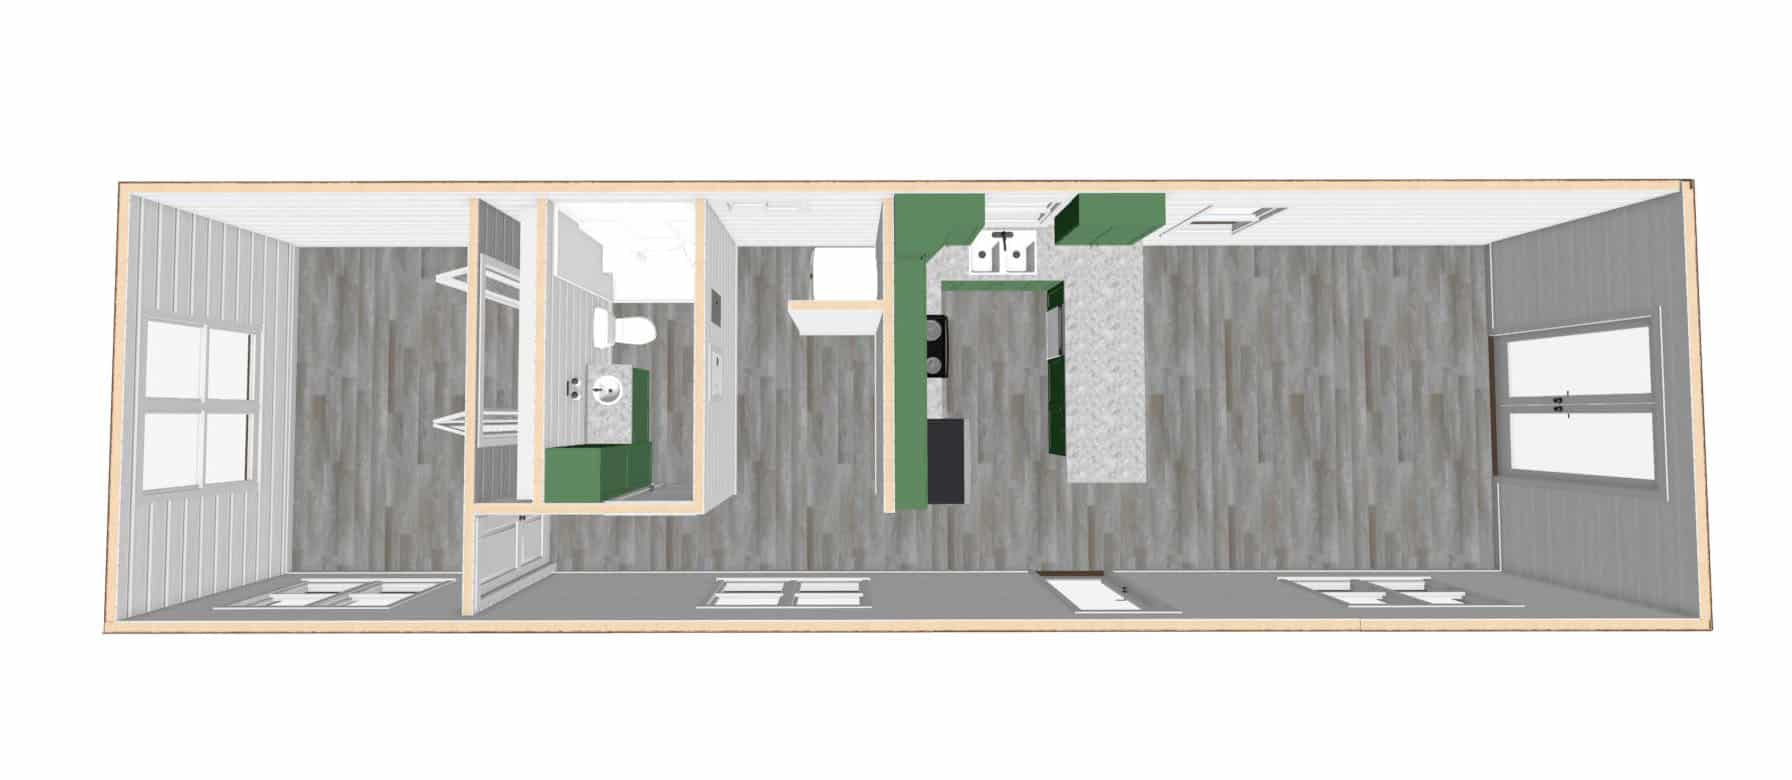 tiny house floor plans